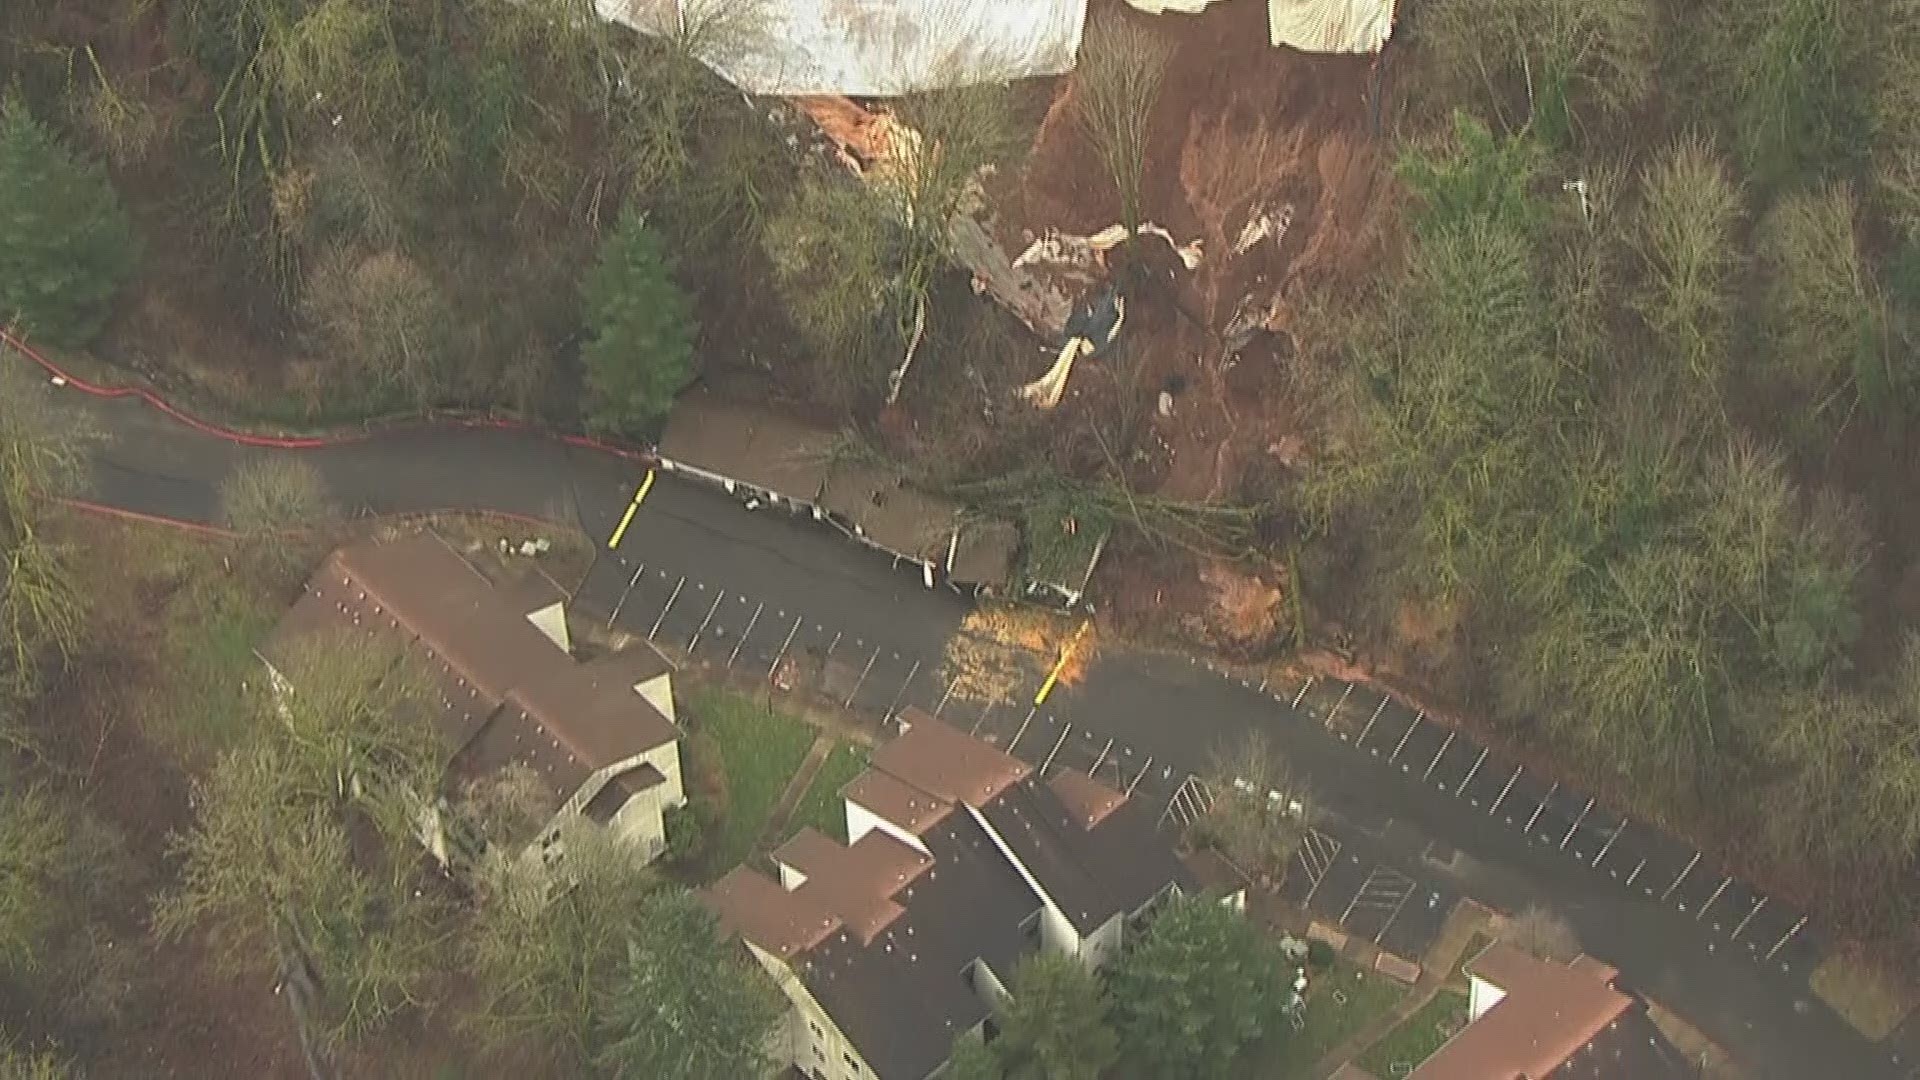 Raw: Oregon City landslides from Sky8